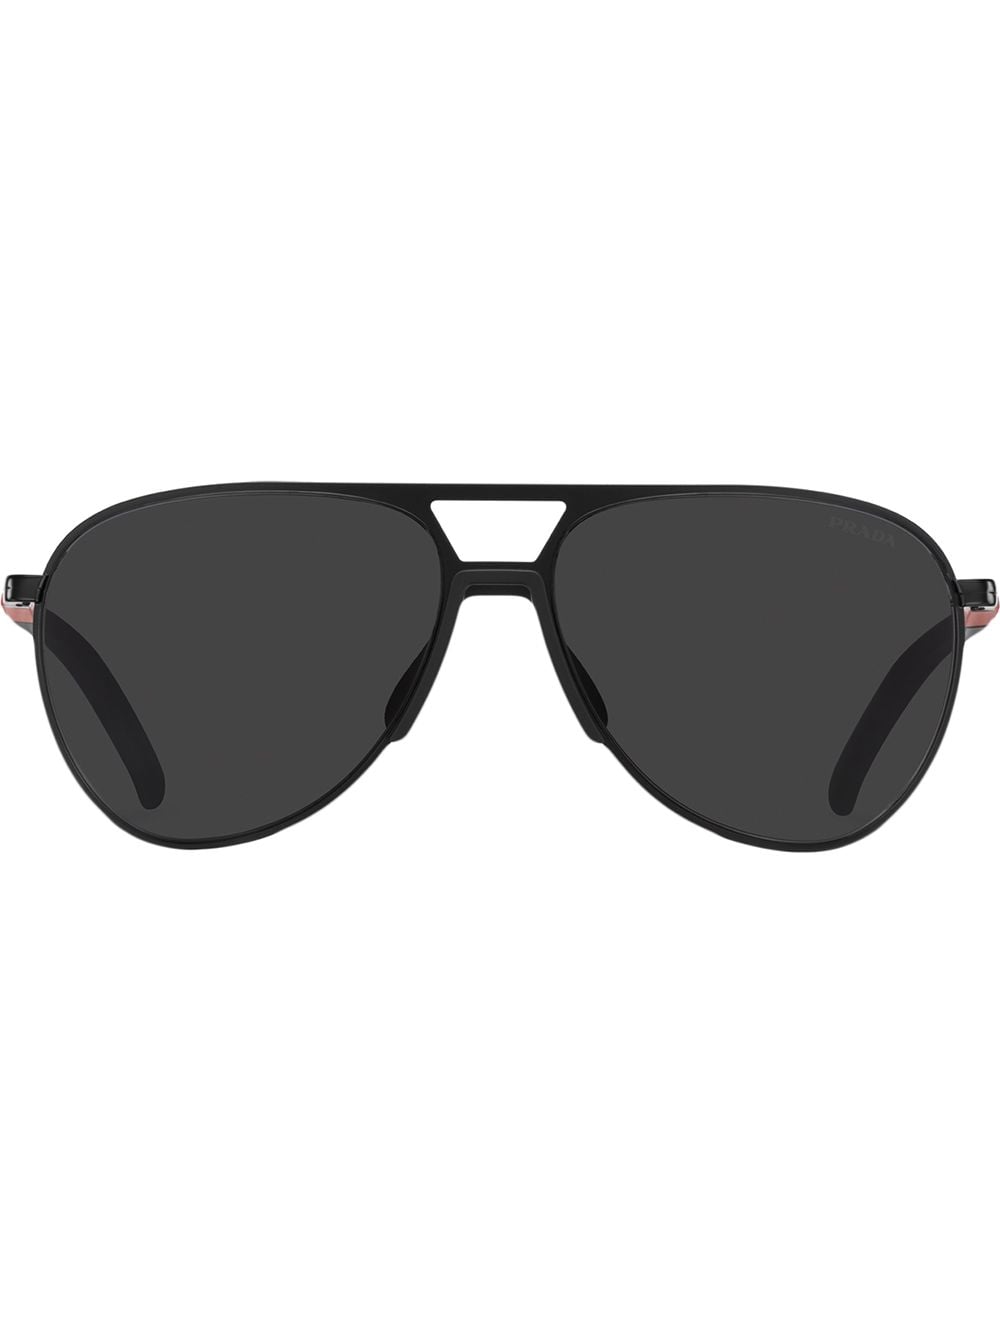 Prada Linea Rossa Eyewear Collection Sunglasses In Slate Gray/black Lenses